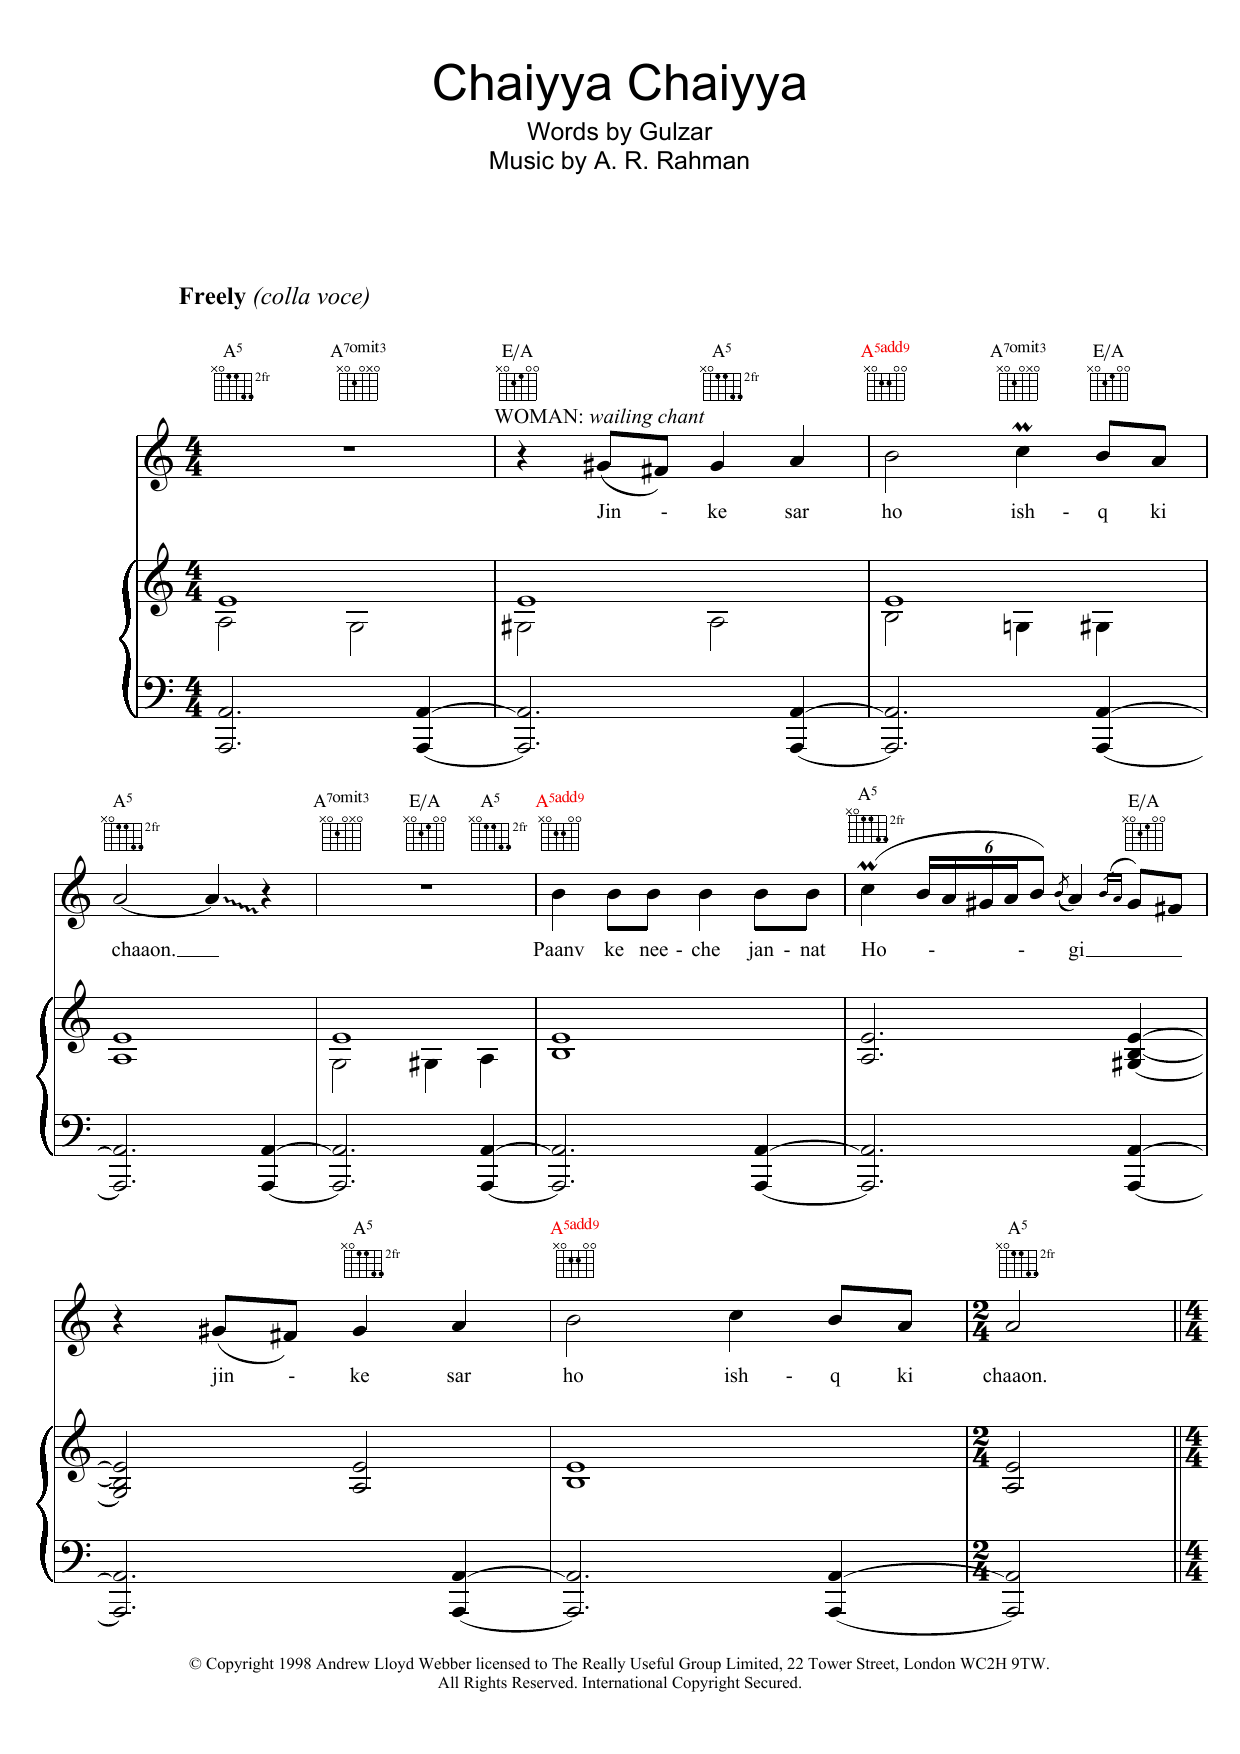 A. R. Rahman Chaiyya Chaiyya Sheet Music Notes & Chords for Piano, Vocal & Guitar - Download or Print PDF